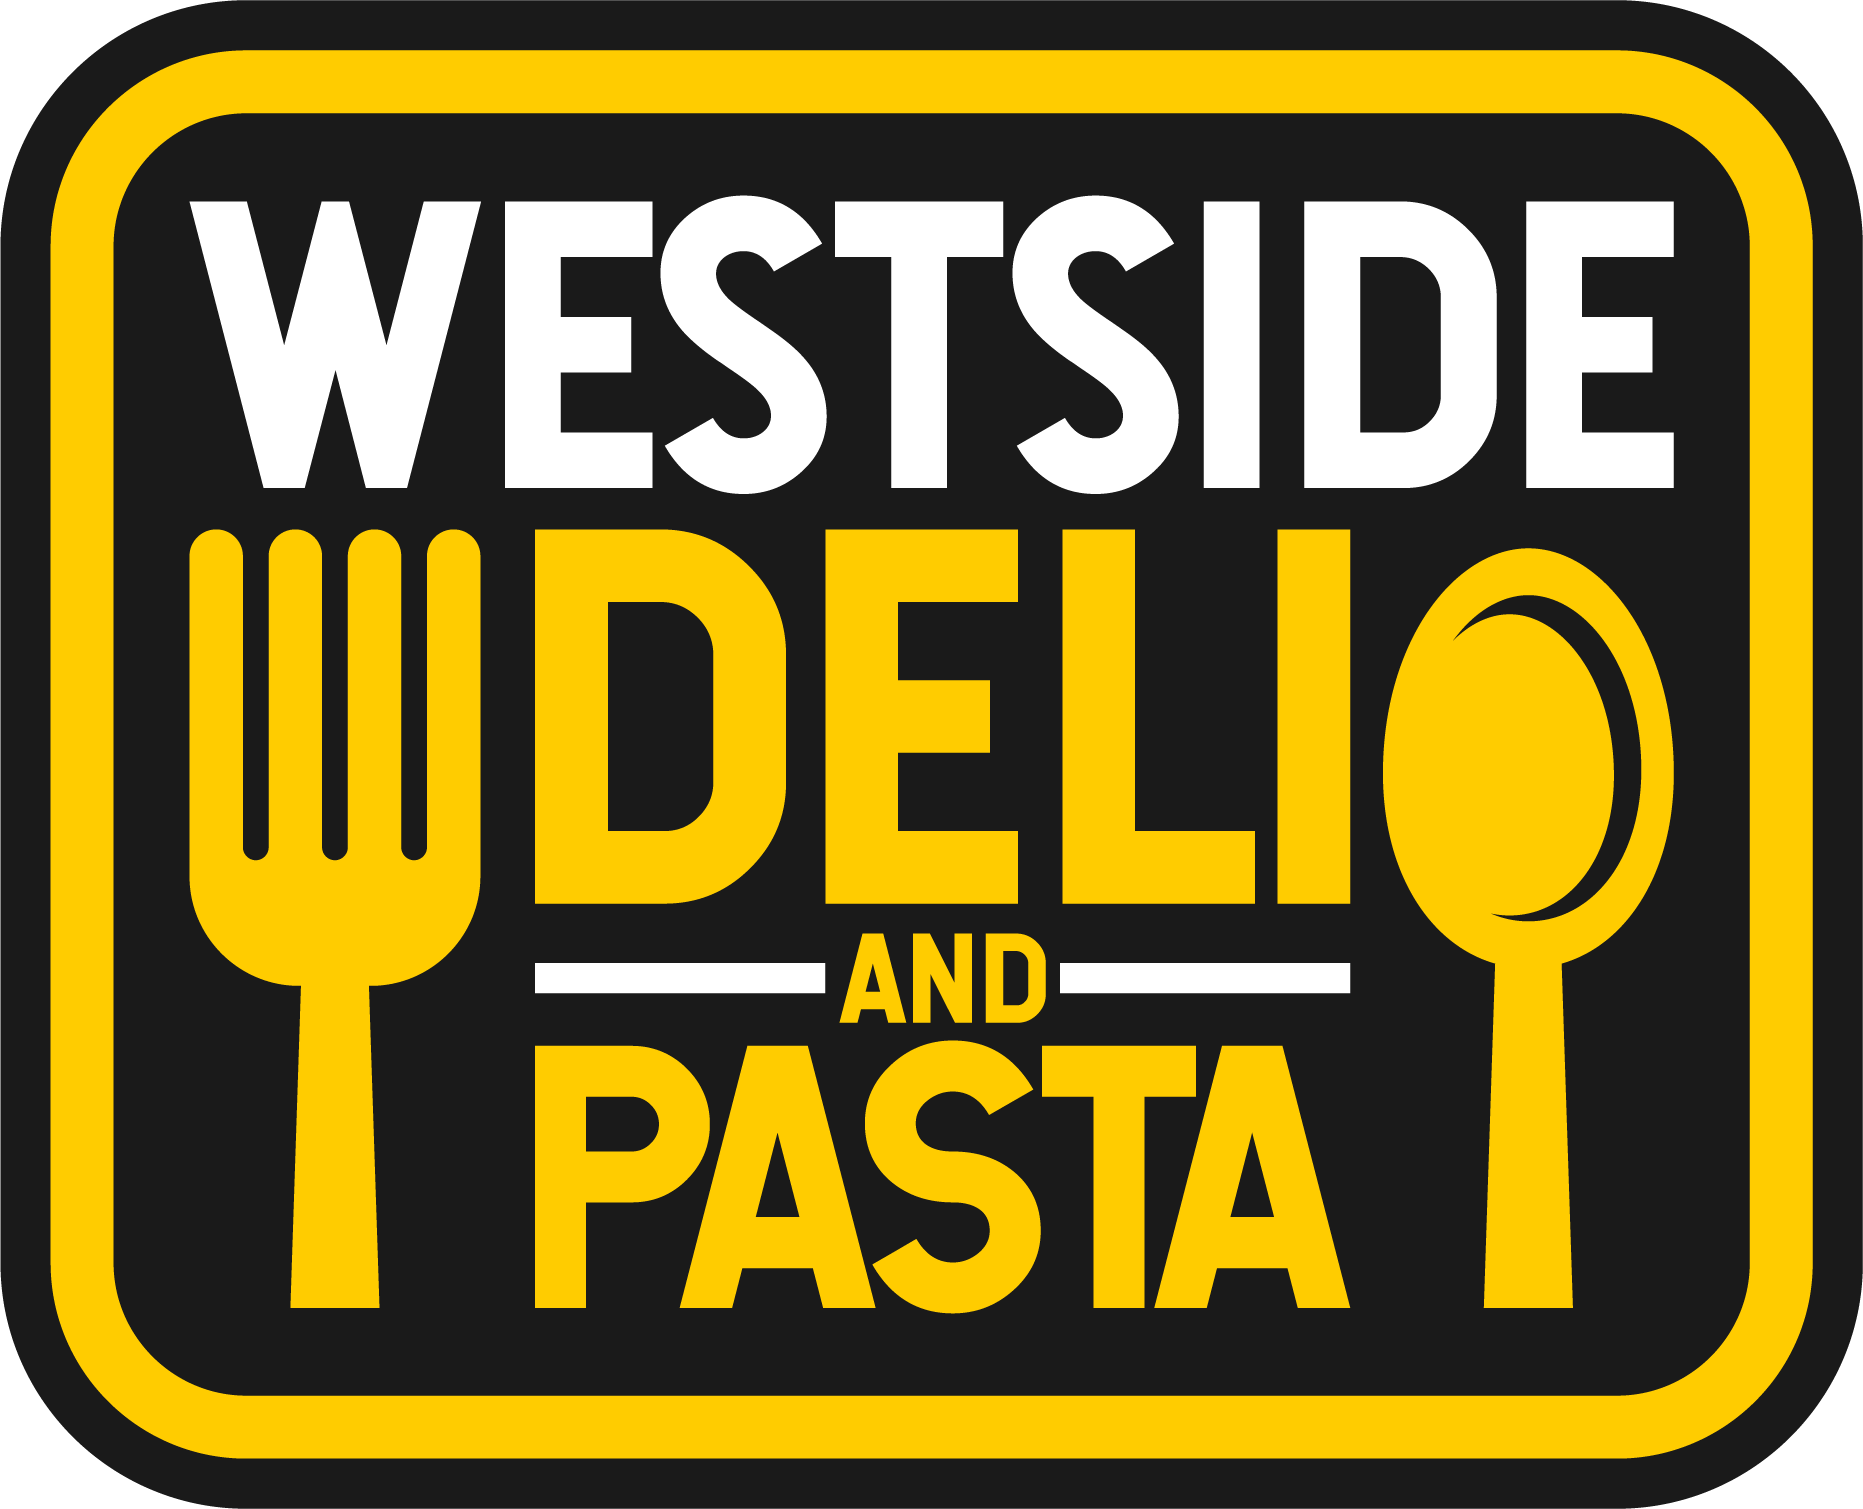 Westside Deli and Pasta